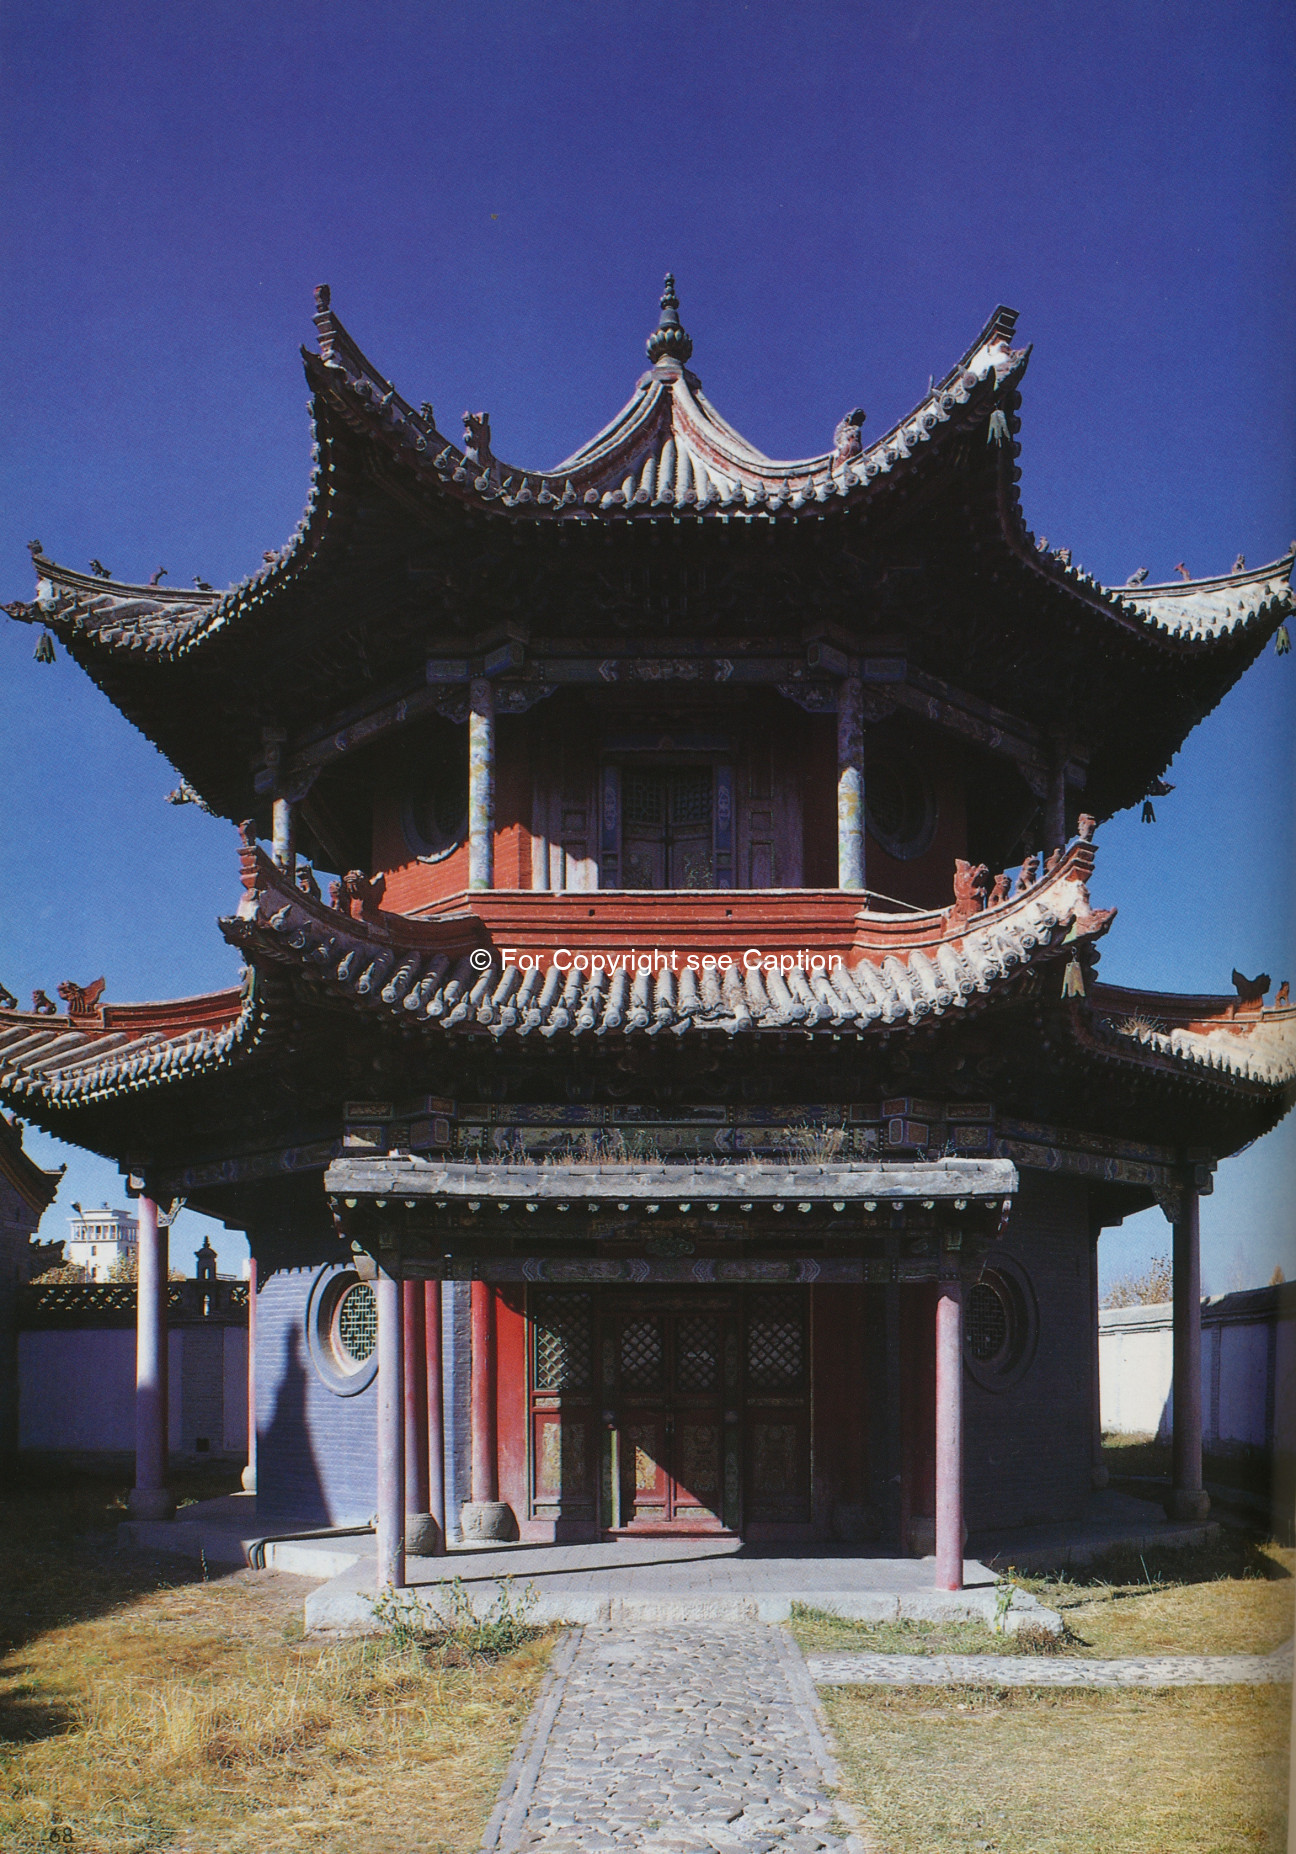 Öndör gegeenii süm. Tsültem, N., Mongolian Architecture. Ulaanbaatar 1988, 68